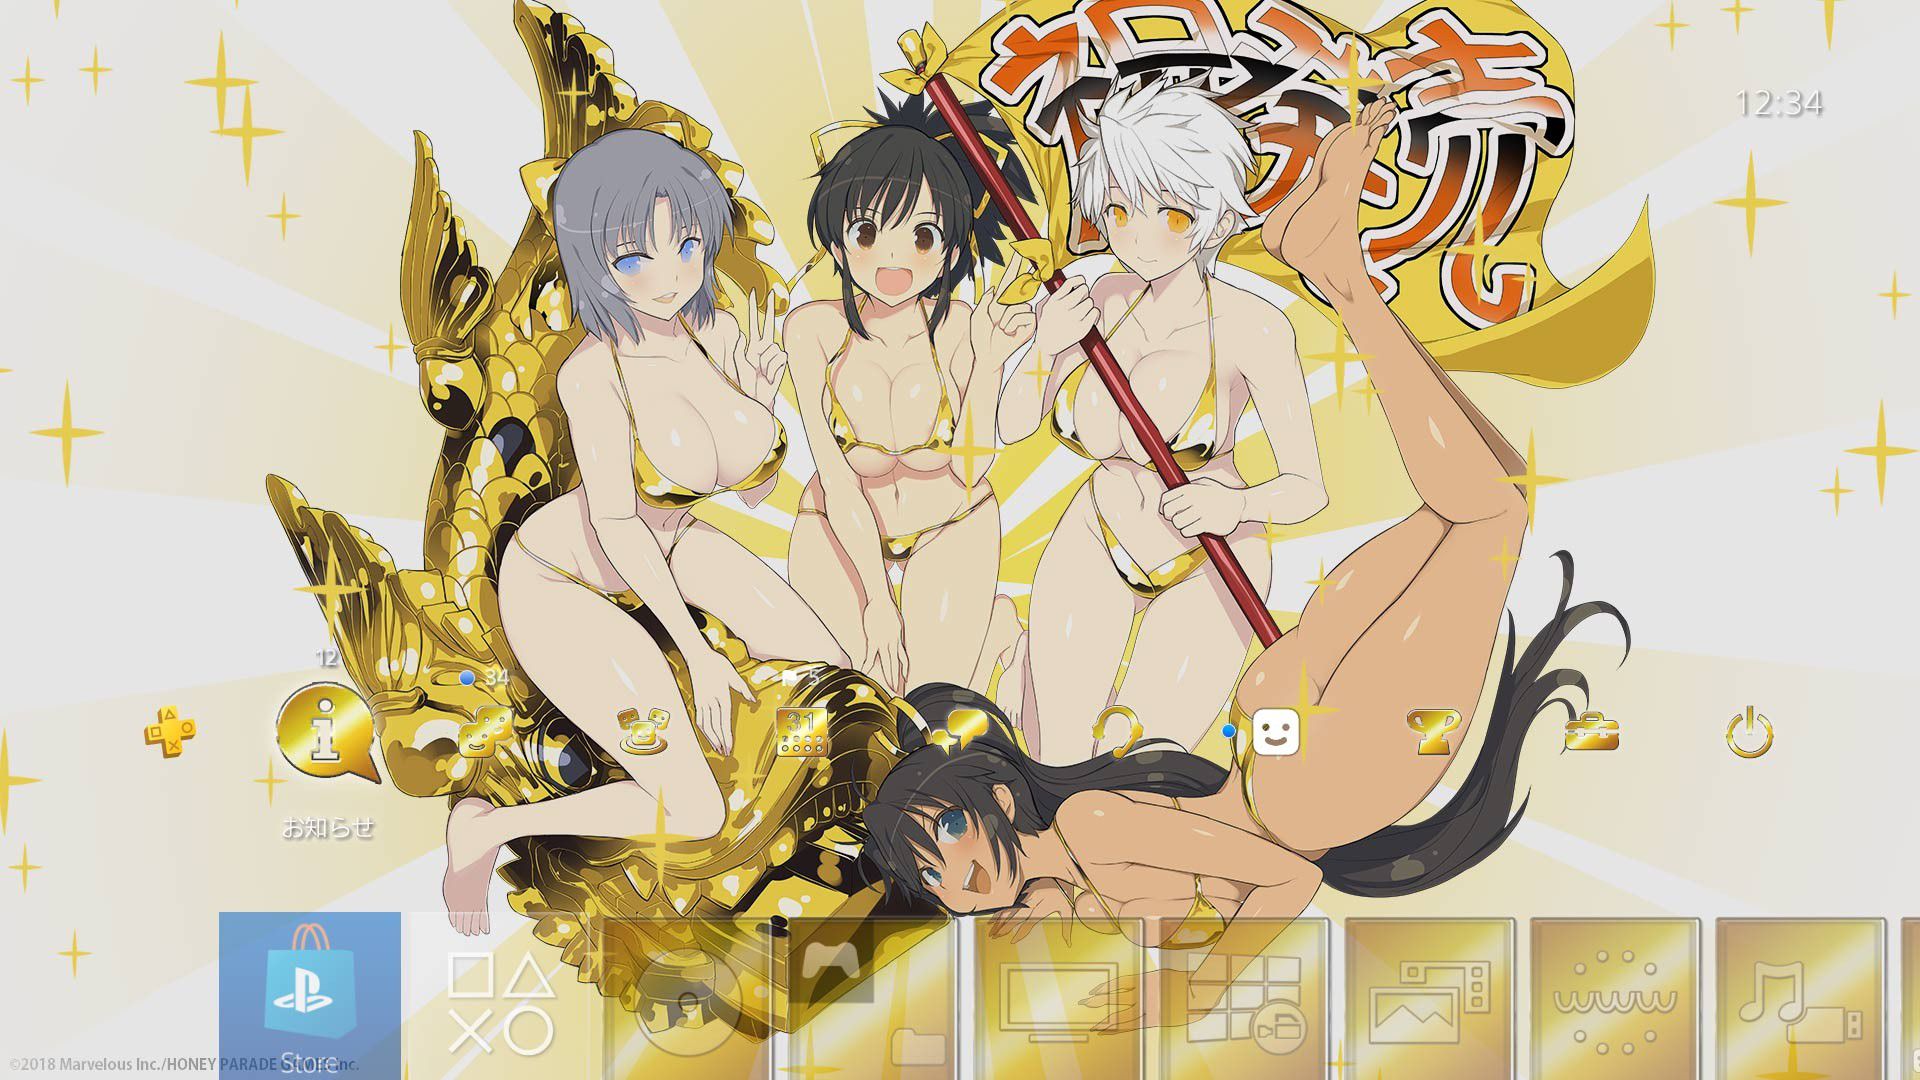 [Senran Kagura Burst Re: newal] Erotic swimsuit illustration wallpaper and PS4 theme in commemoration of release! 8